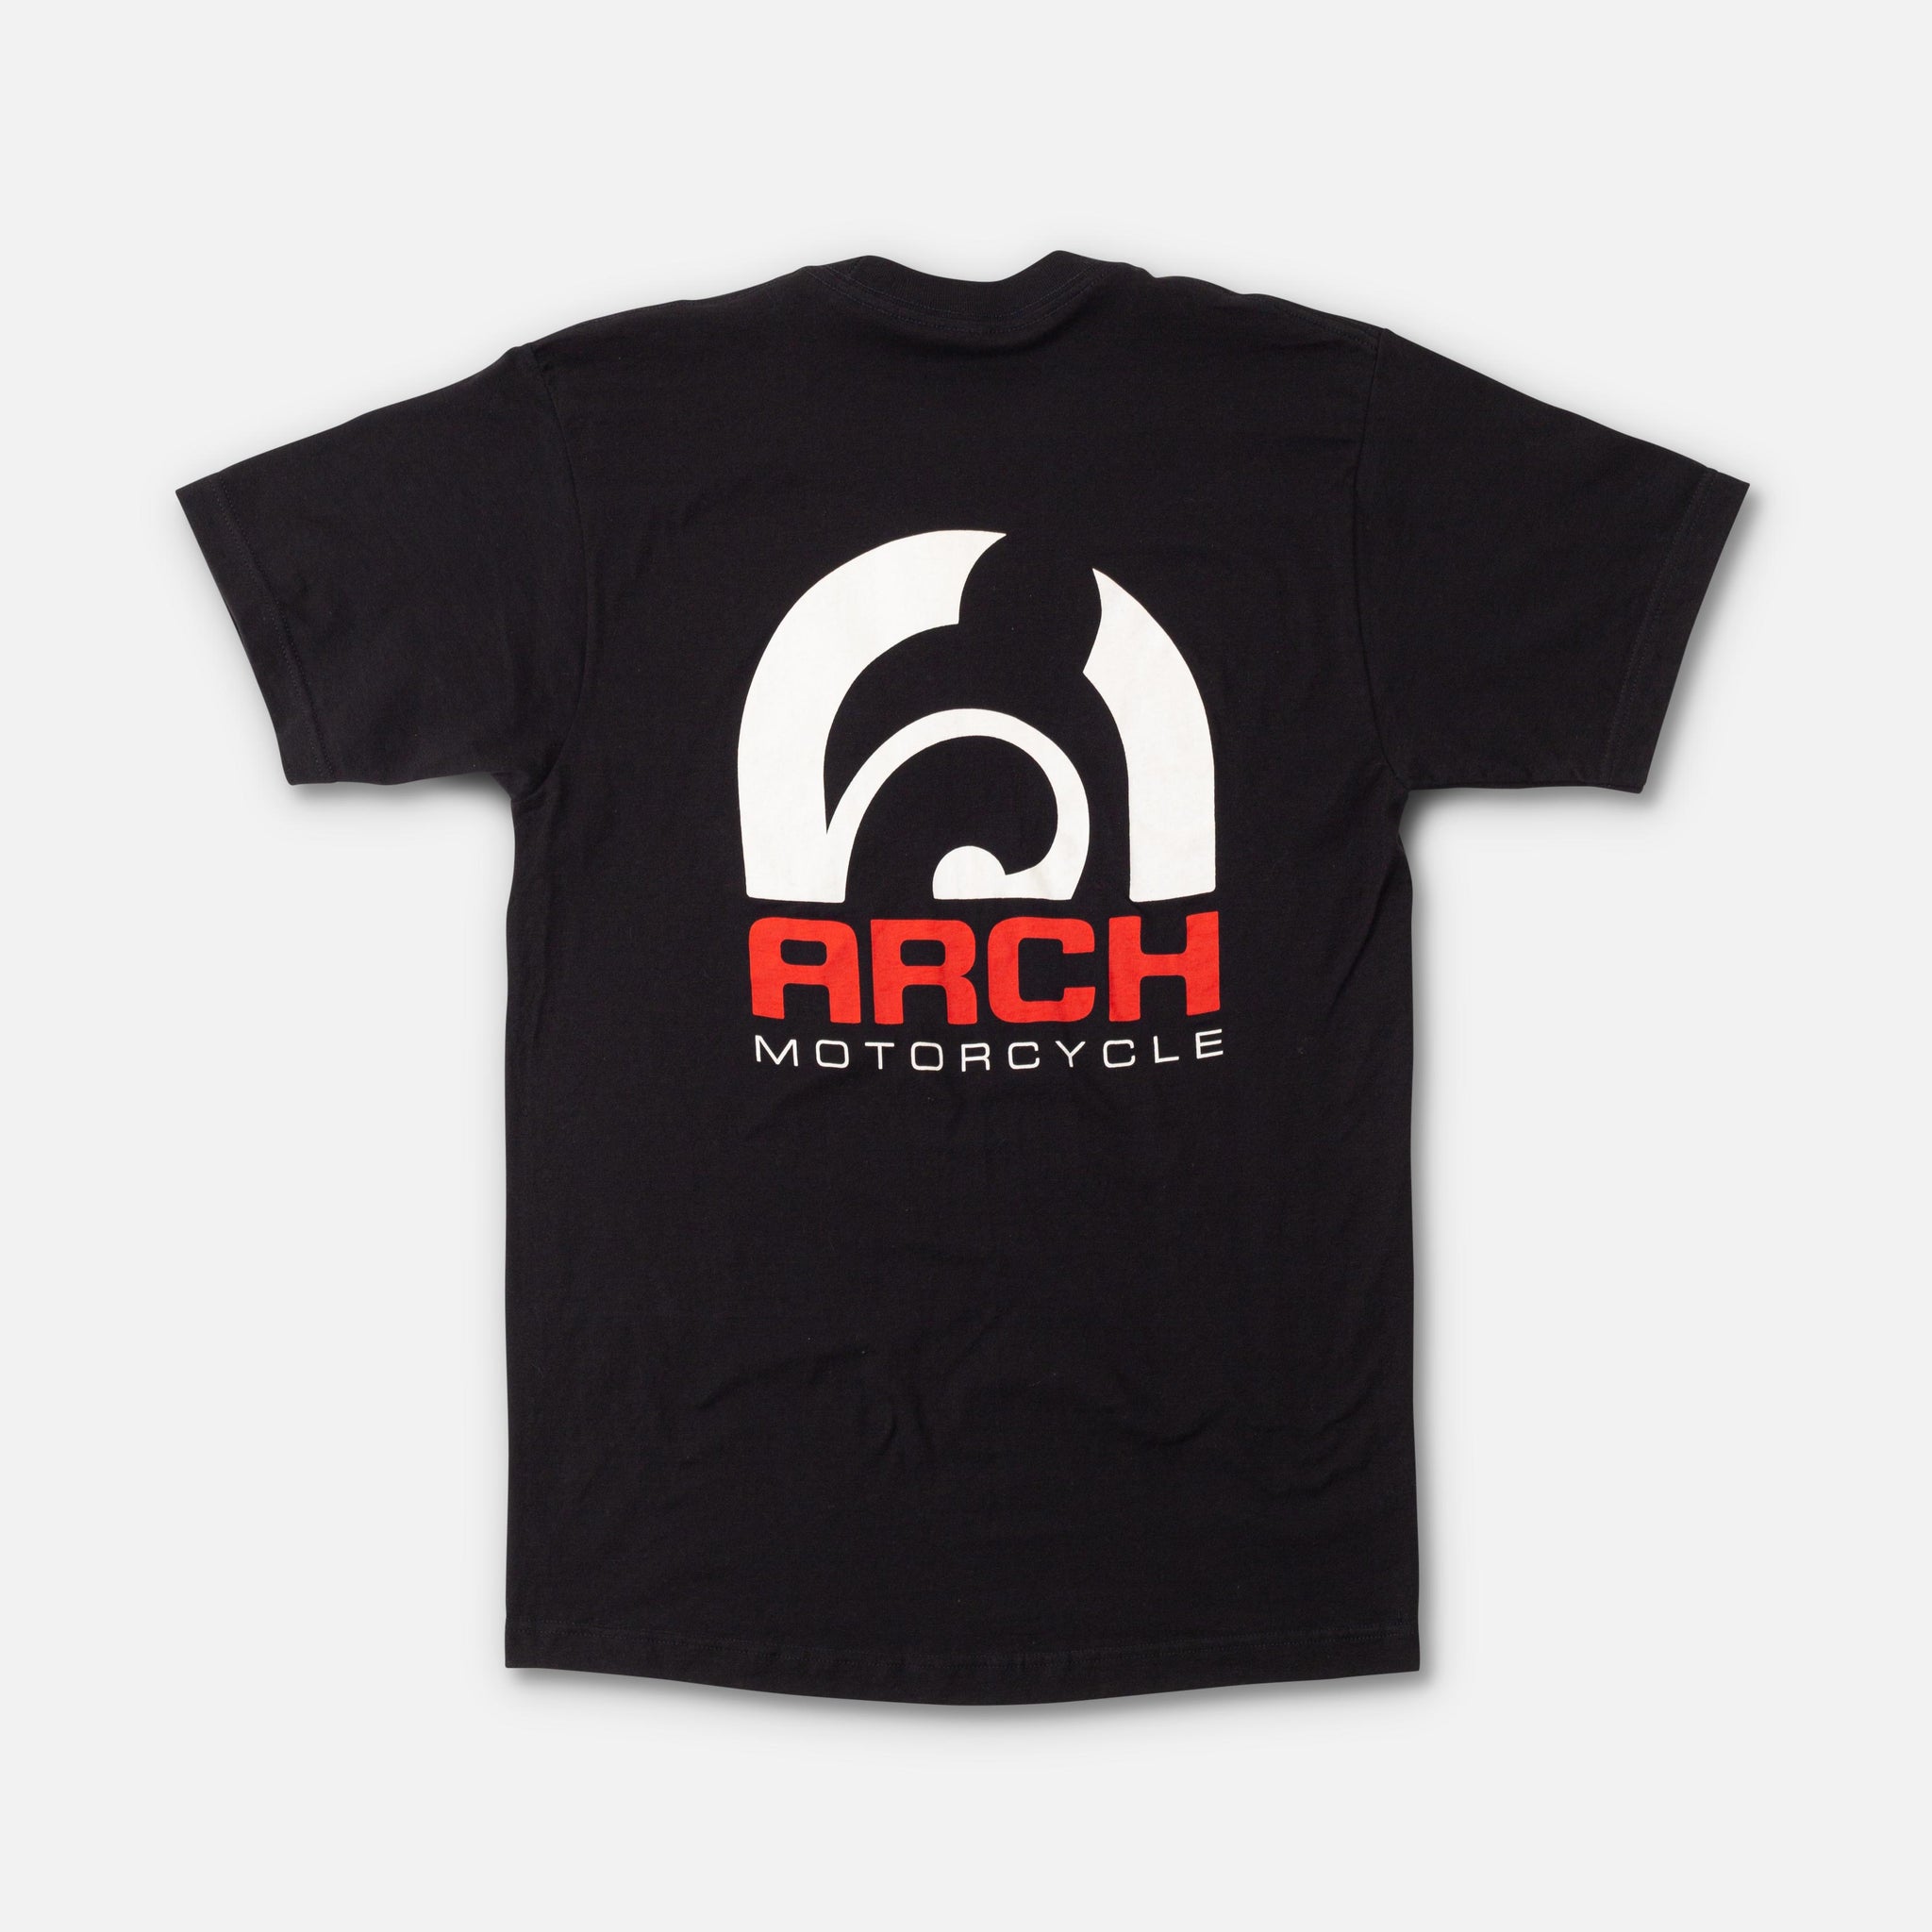 ARCH Motorcycle "Buddha" T-Shirt